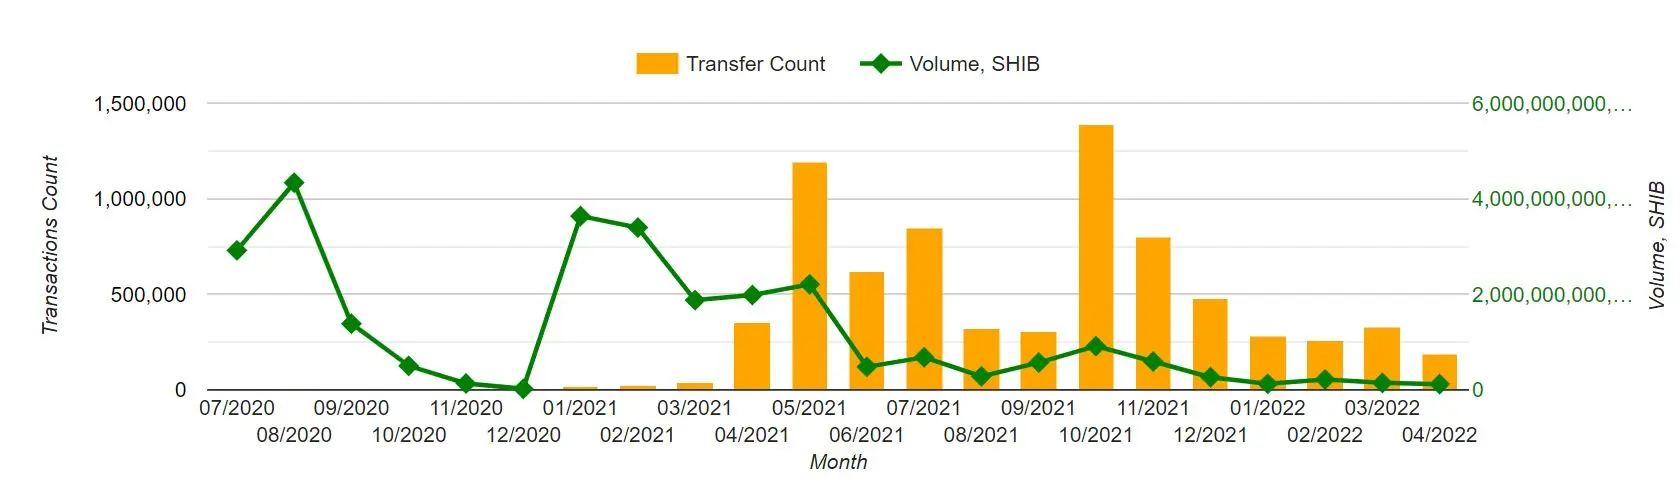 Taegliche SHIB Transaktionen und Volumen